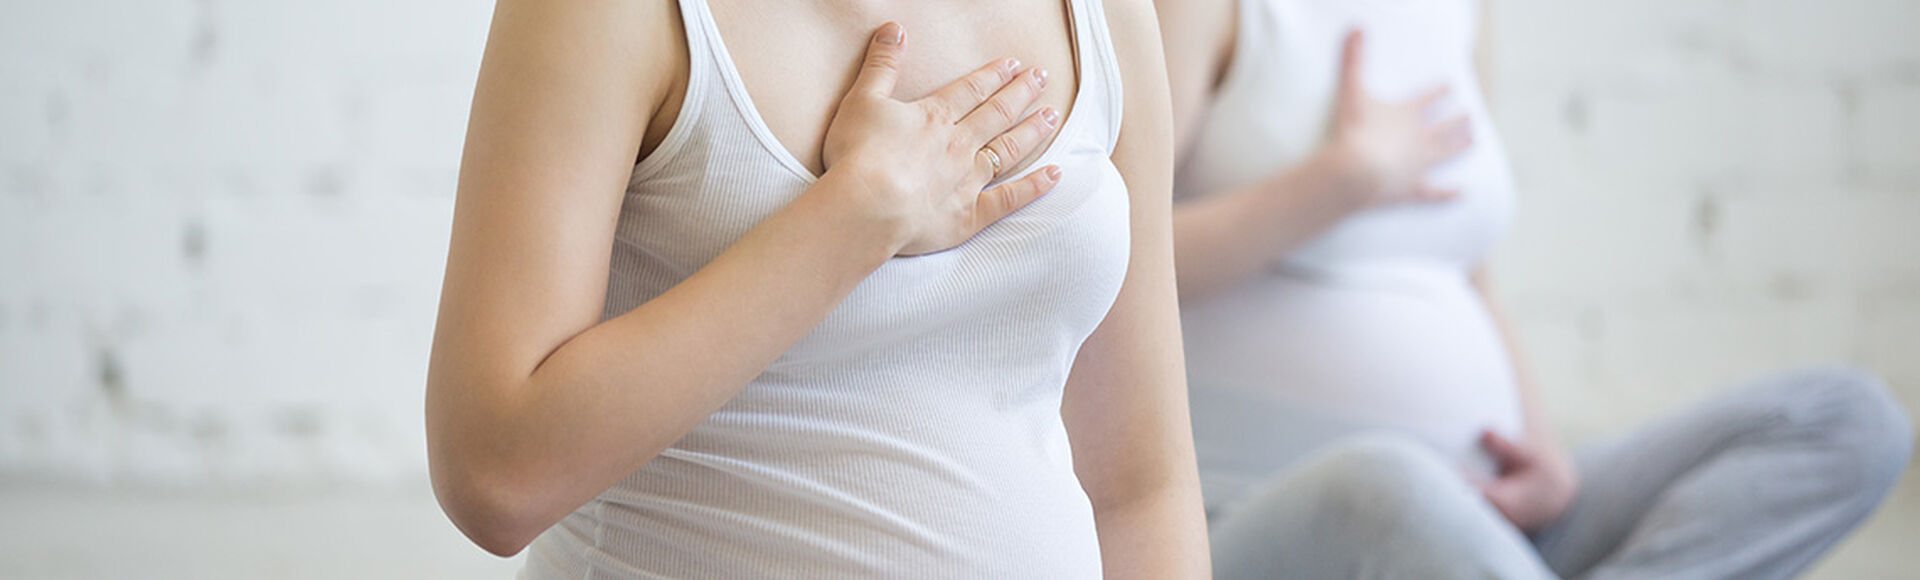 Principais causas de fadiga na gravidez